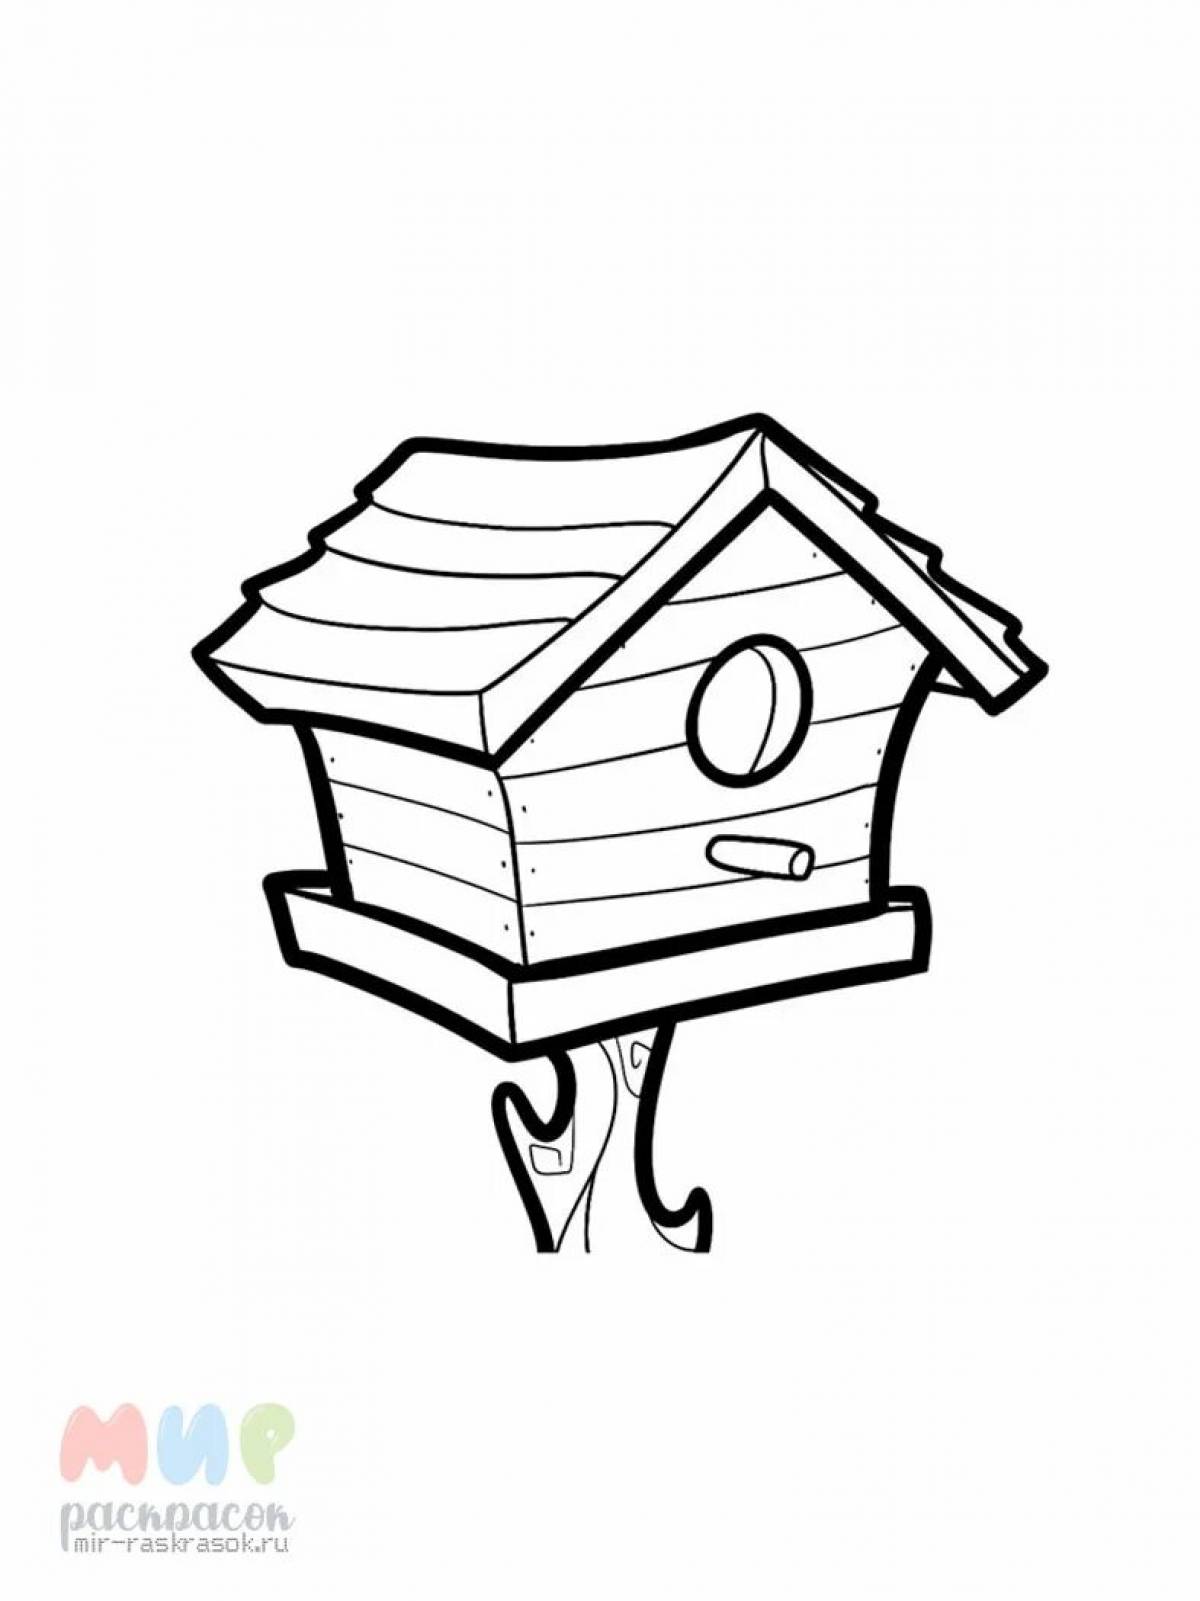 Birdhouse for kids #19